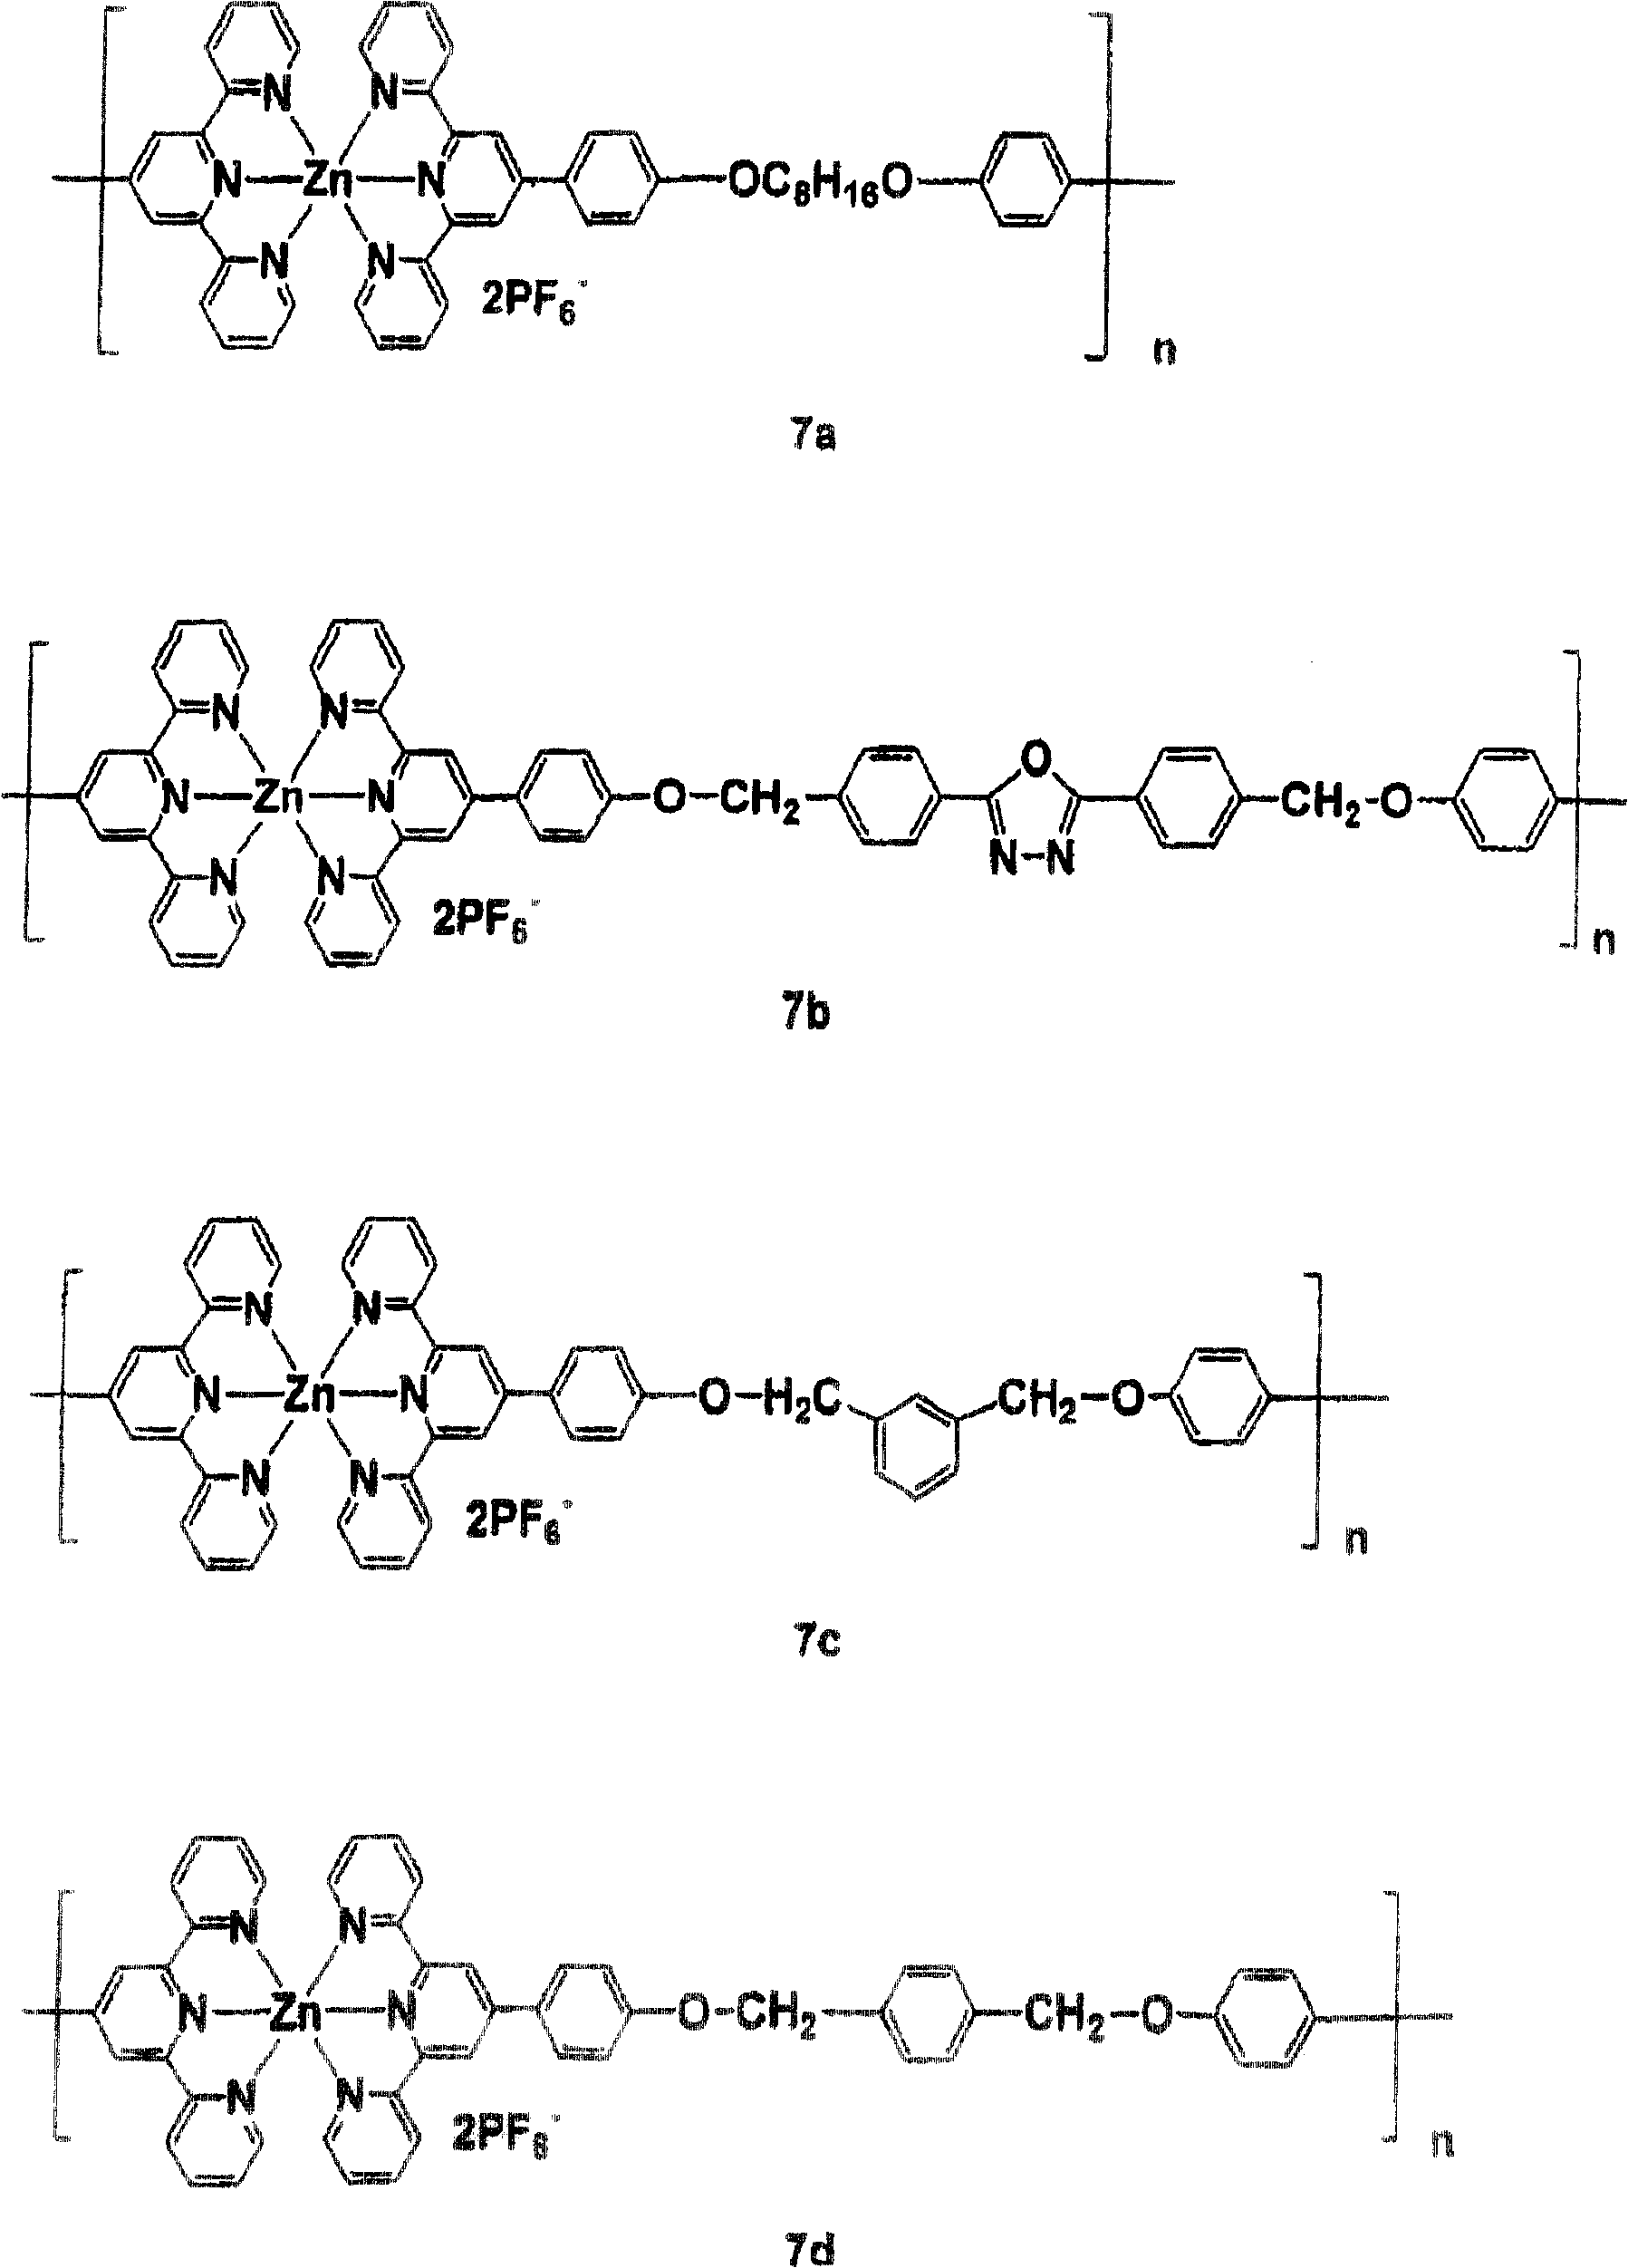 Electroluminescent metallo-supramolecules with terpyridine-based groups